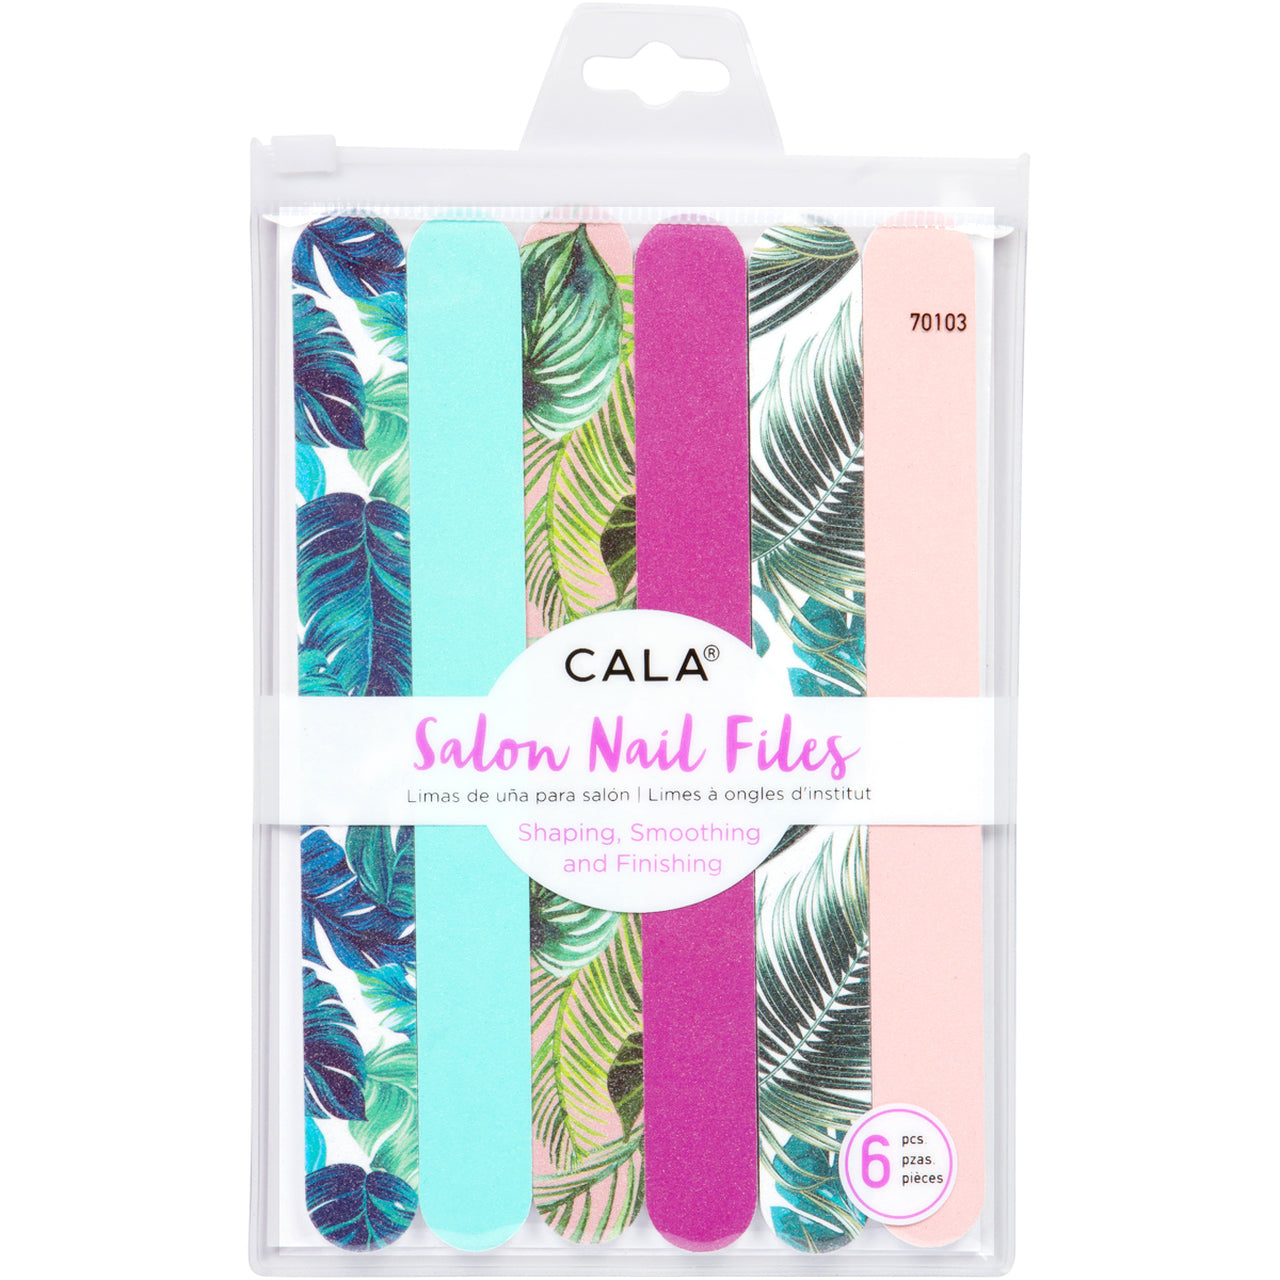 Cala salon nail files - Pink Jungle (6PCS)